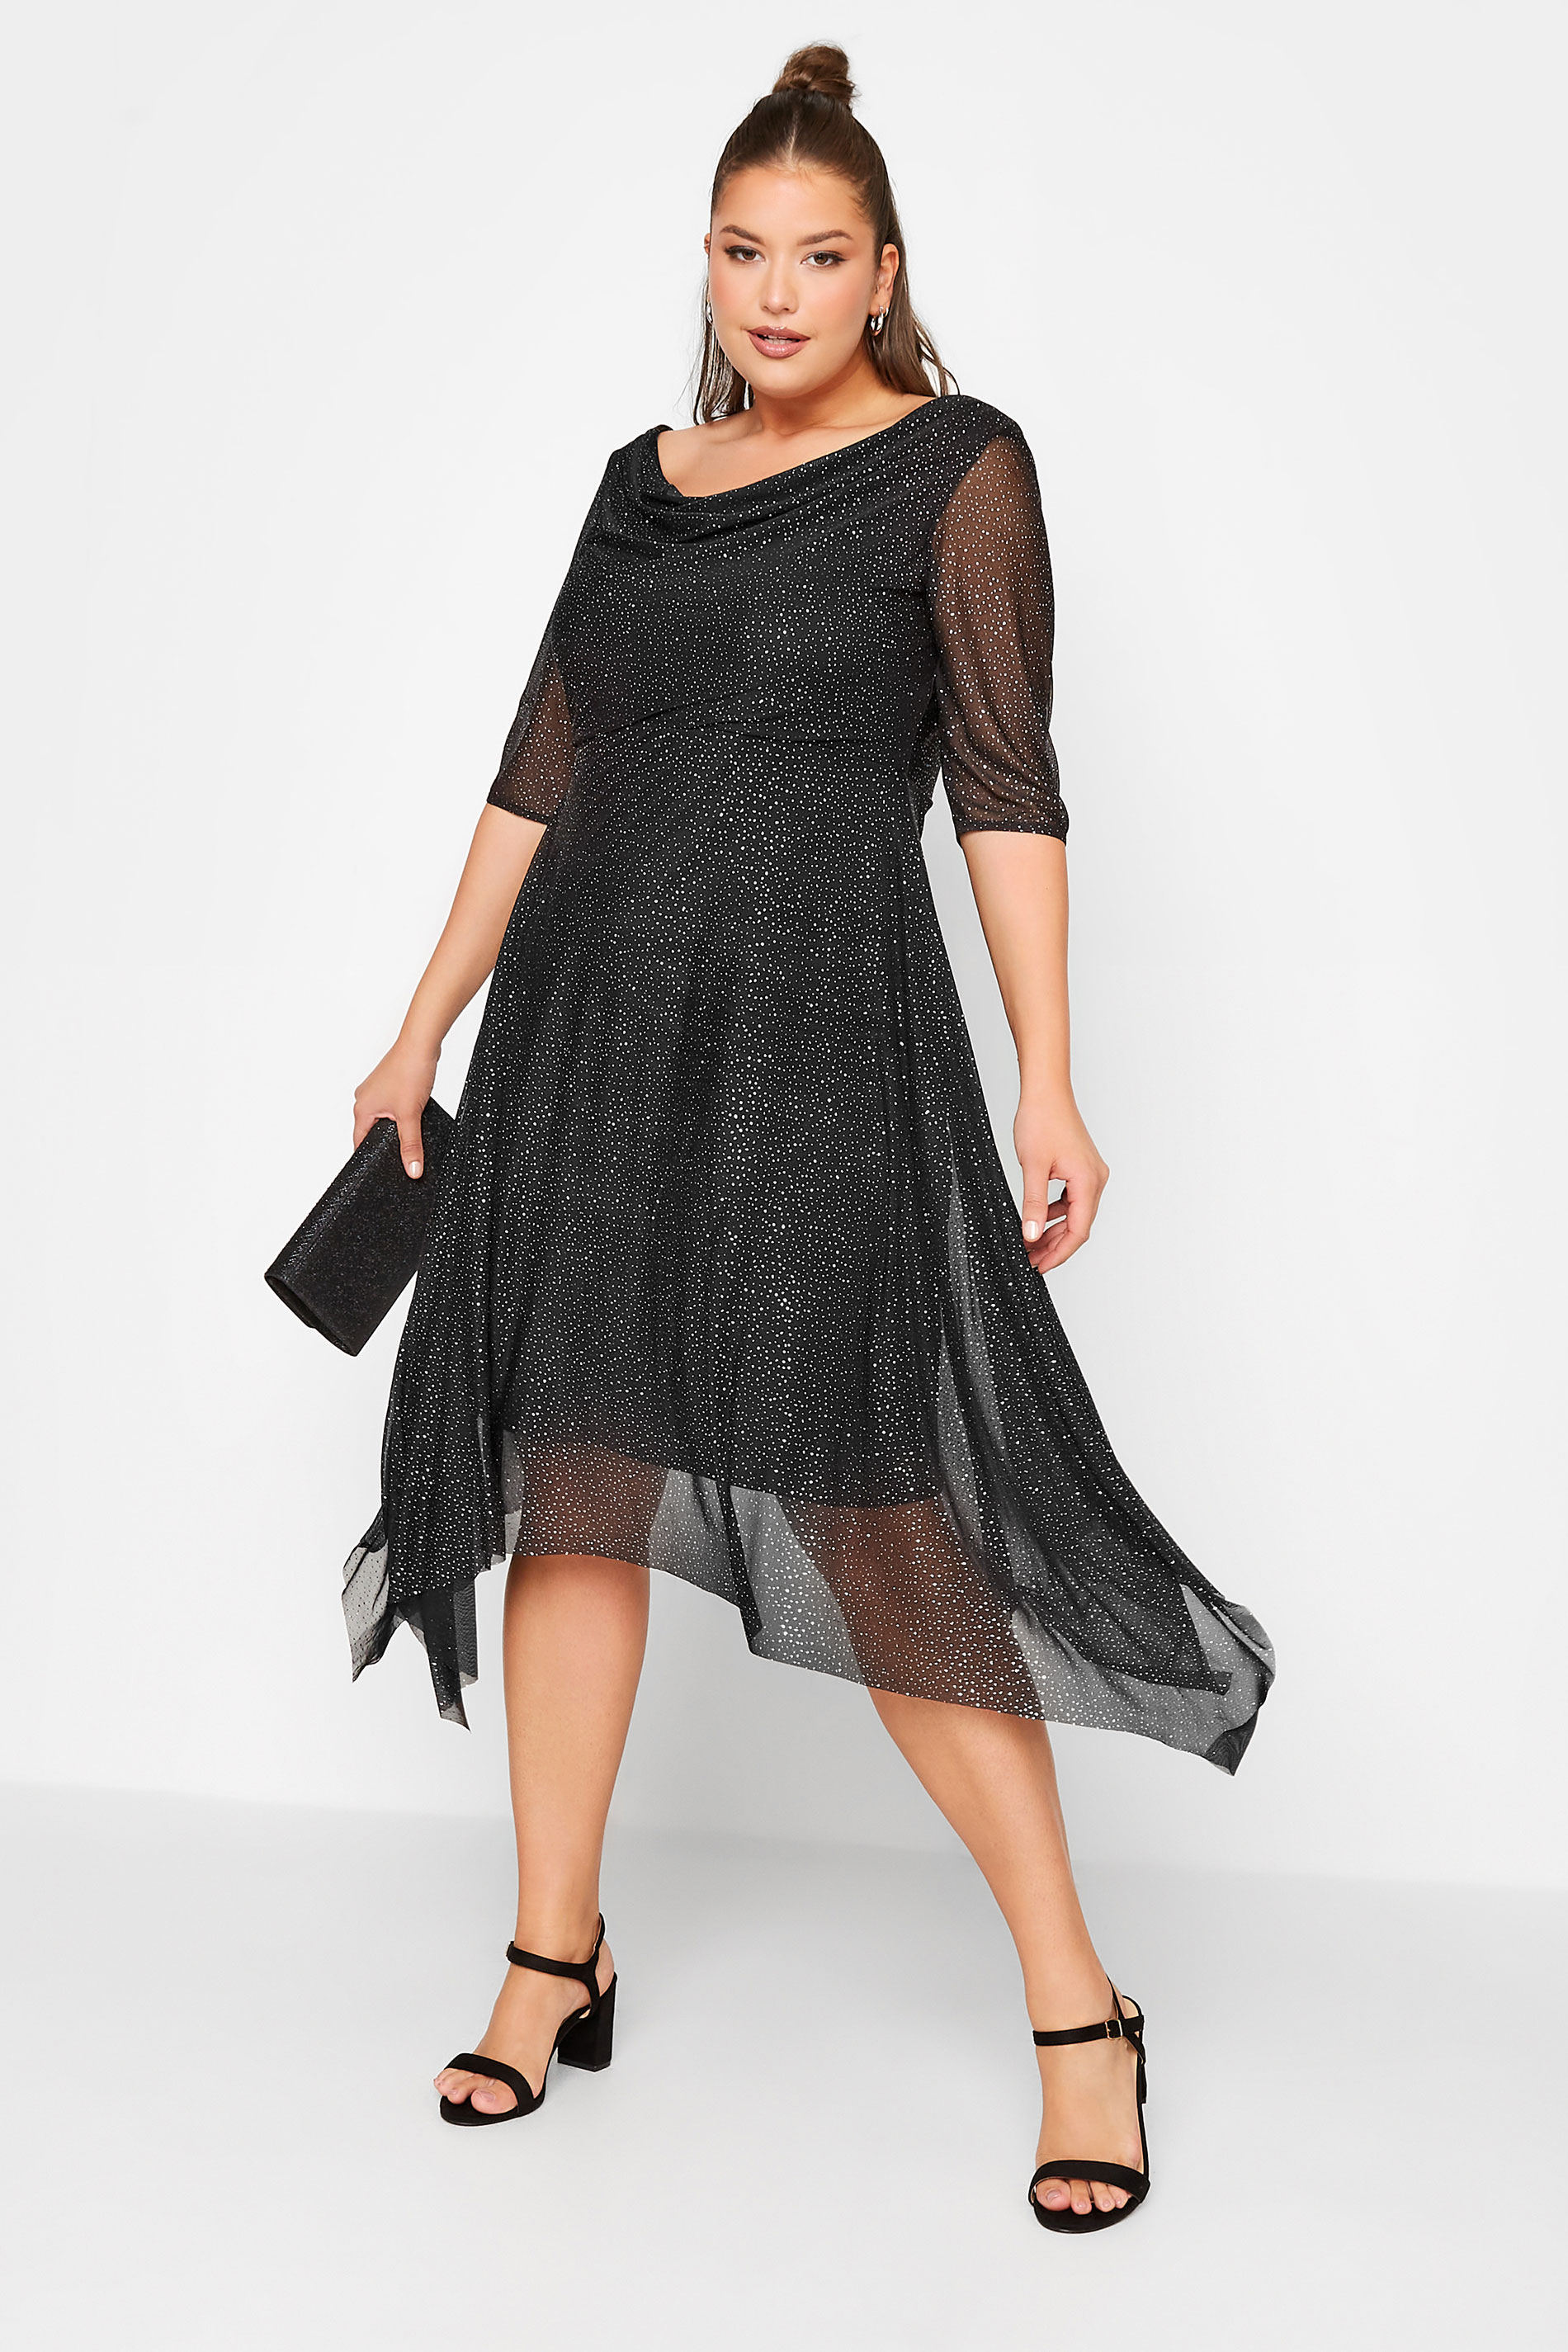 YOURS LONDON Plus-Size Curve Black Glitter Cowl Neck Midi Dress | Yours Clothing 1